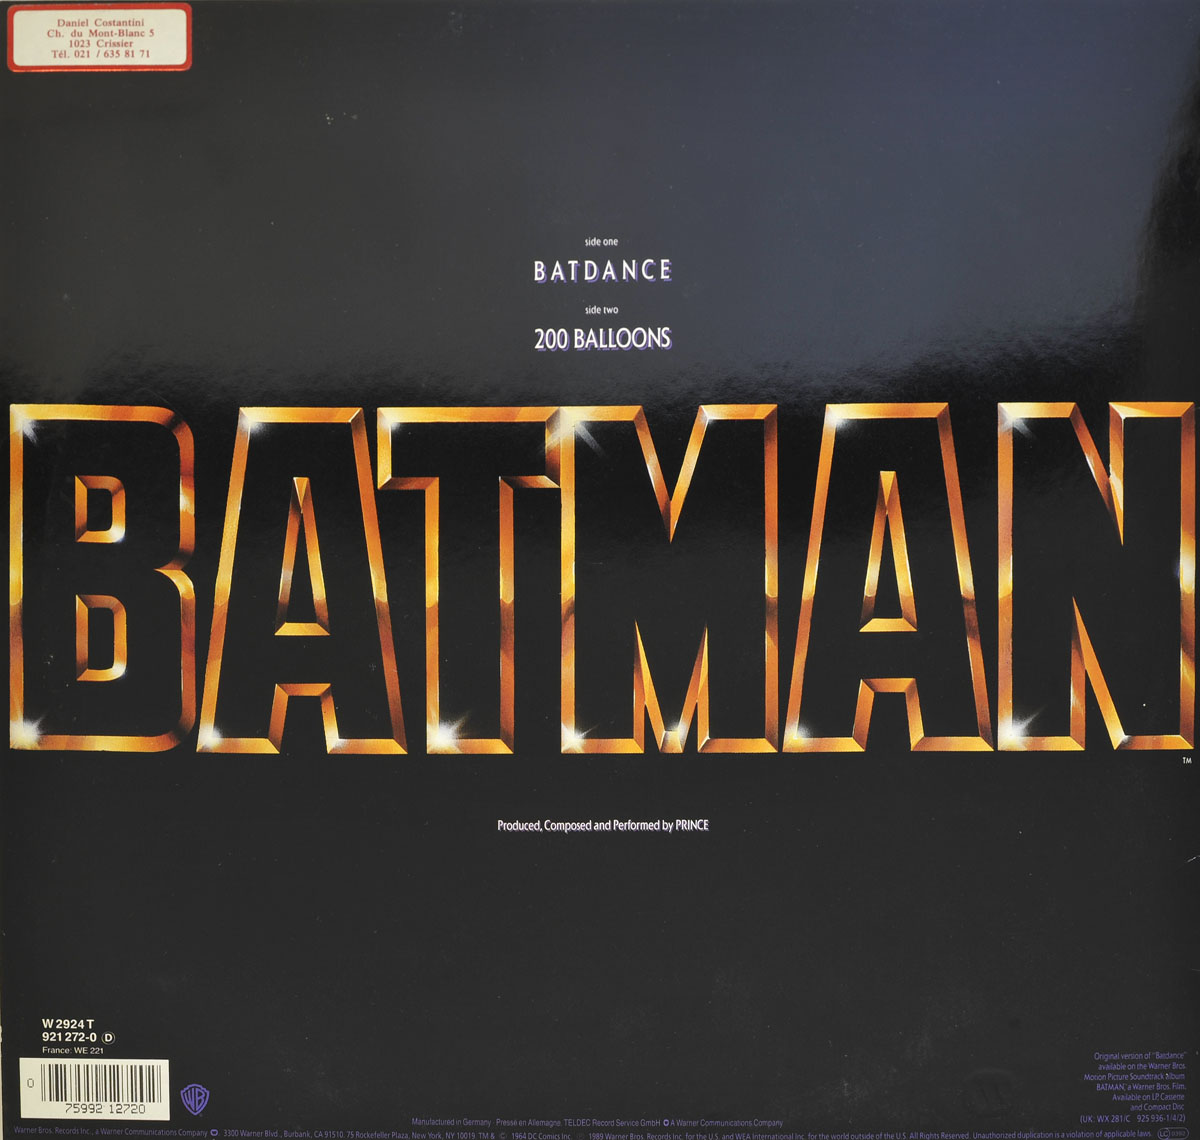 PRINCE Batdance Pop, Soundtrack 12" LP Vinyl Album Gallery & Information